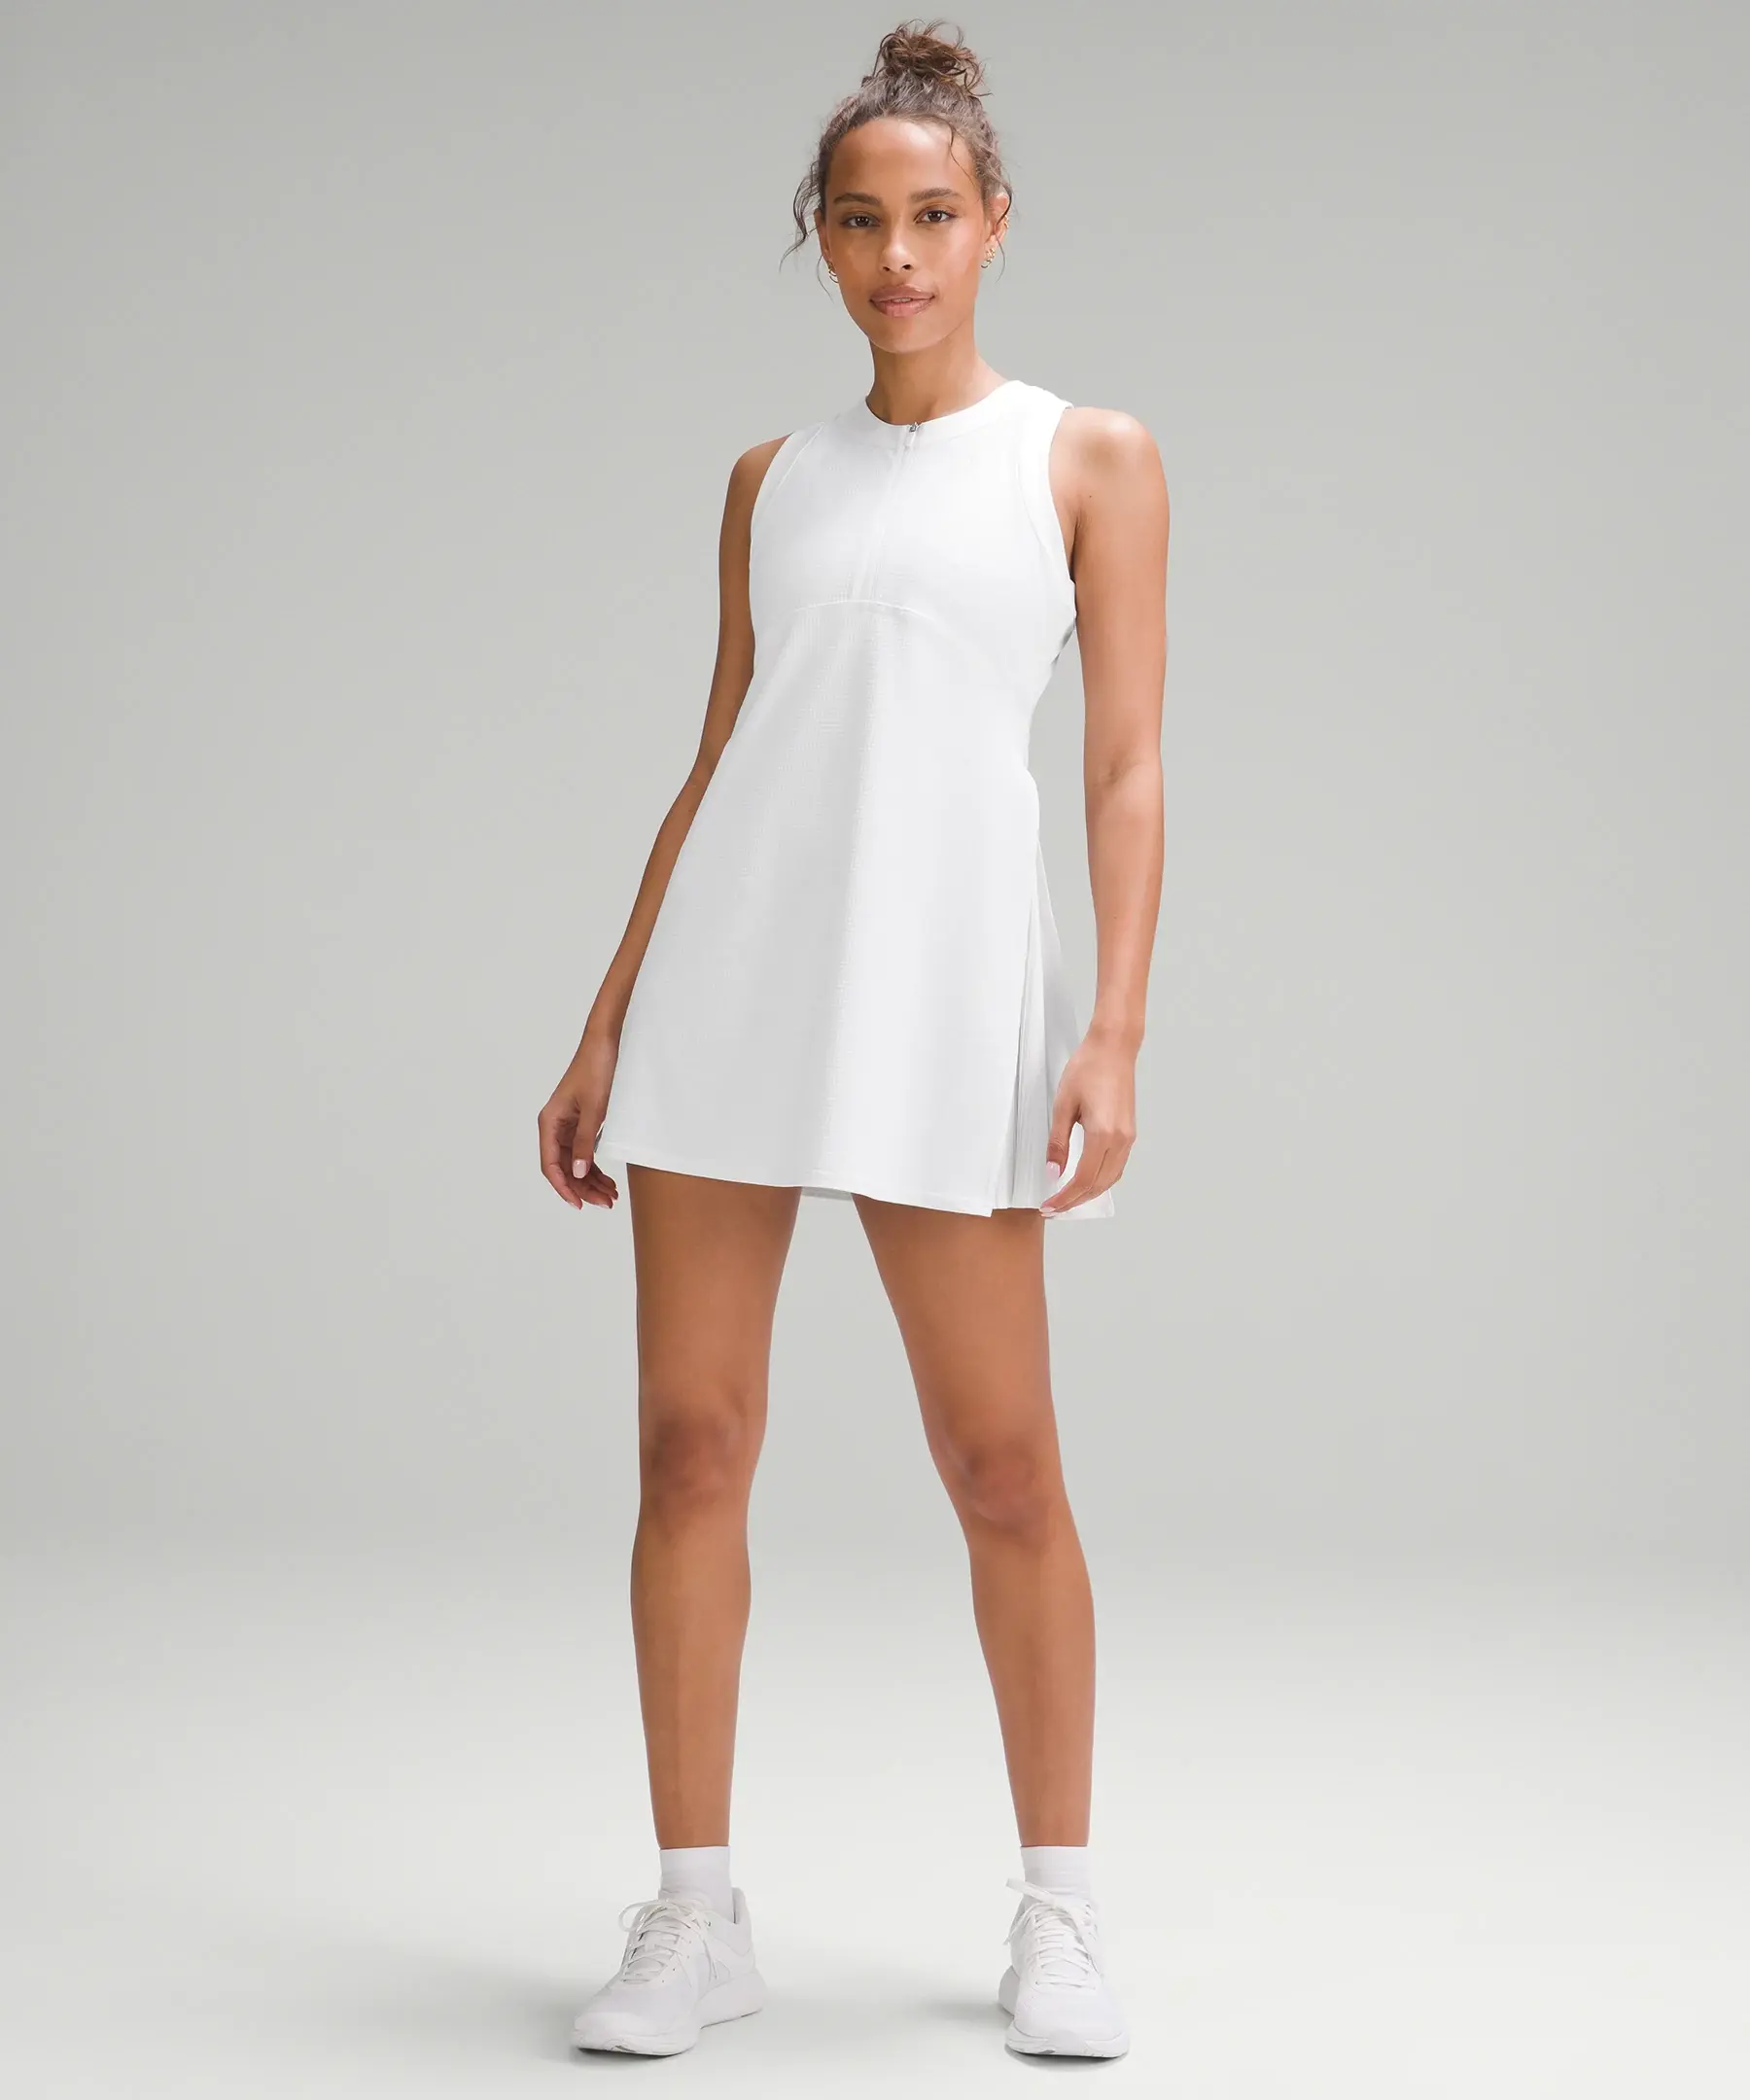 Lululemon Grid-Texture Sleeveless Tennis Dress. 1